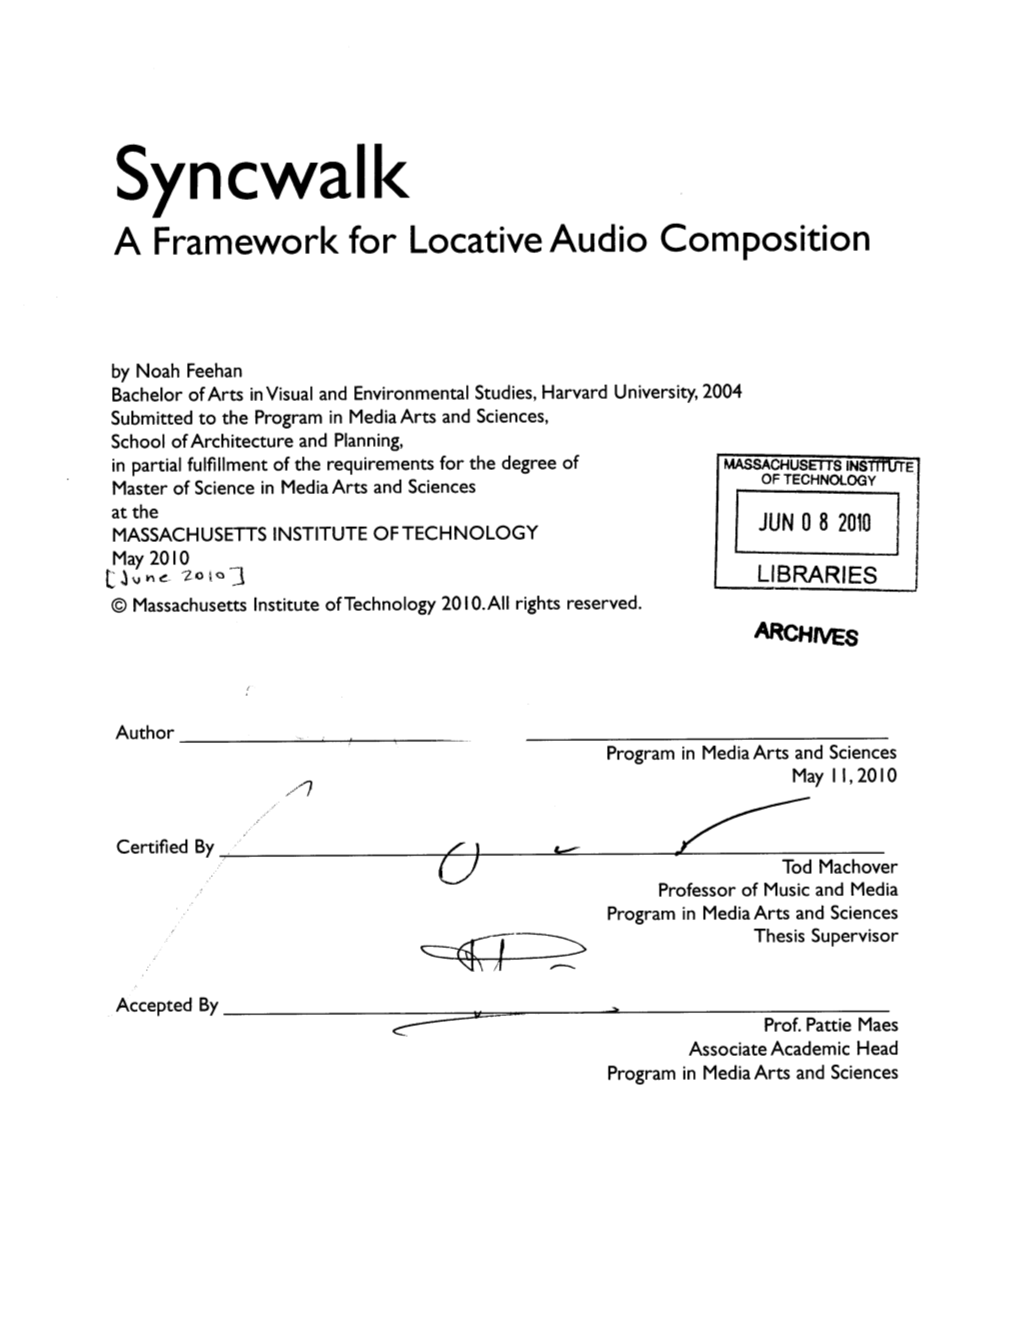 Syncwalk a Framework for Locative Audio Composition